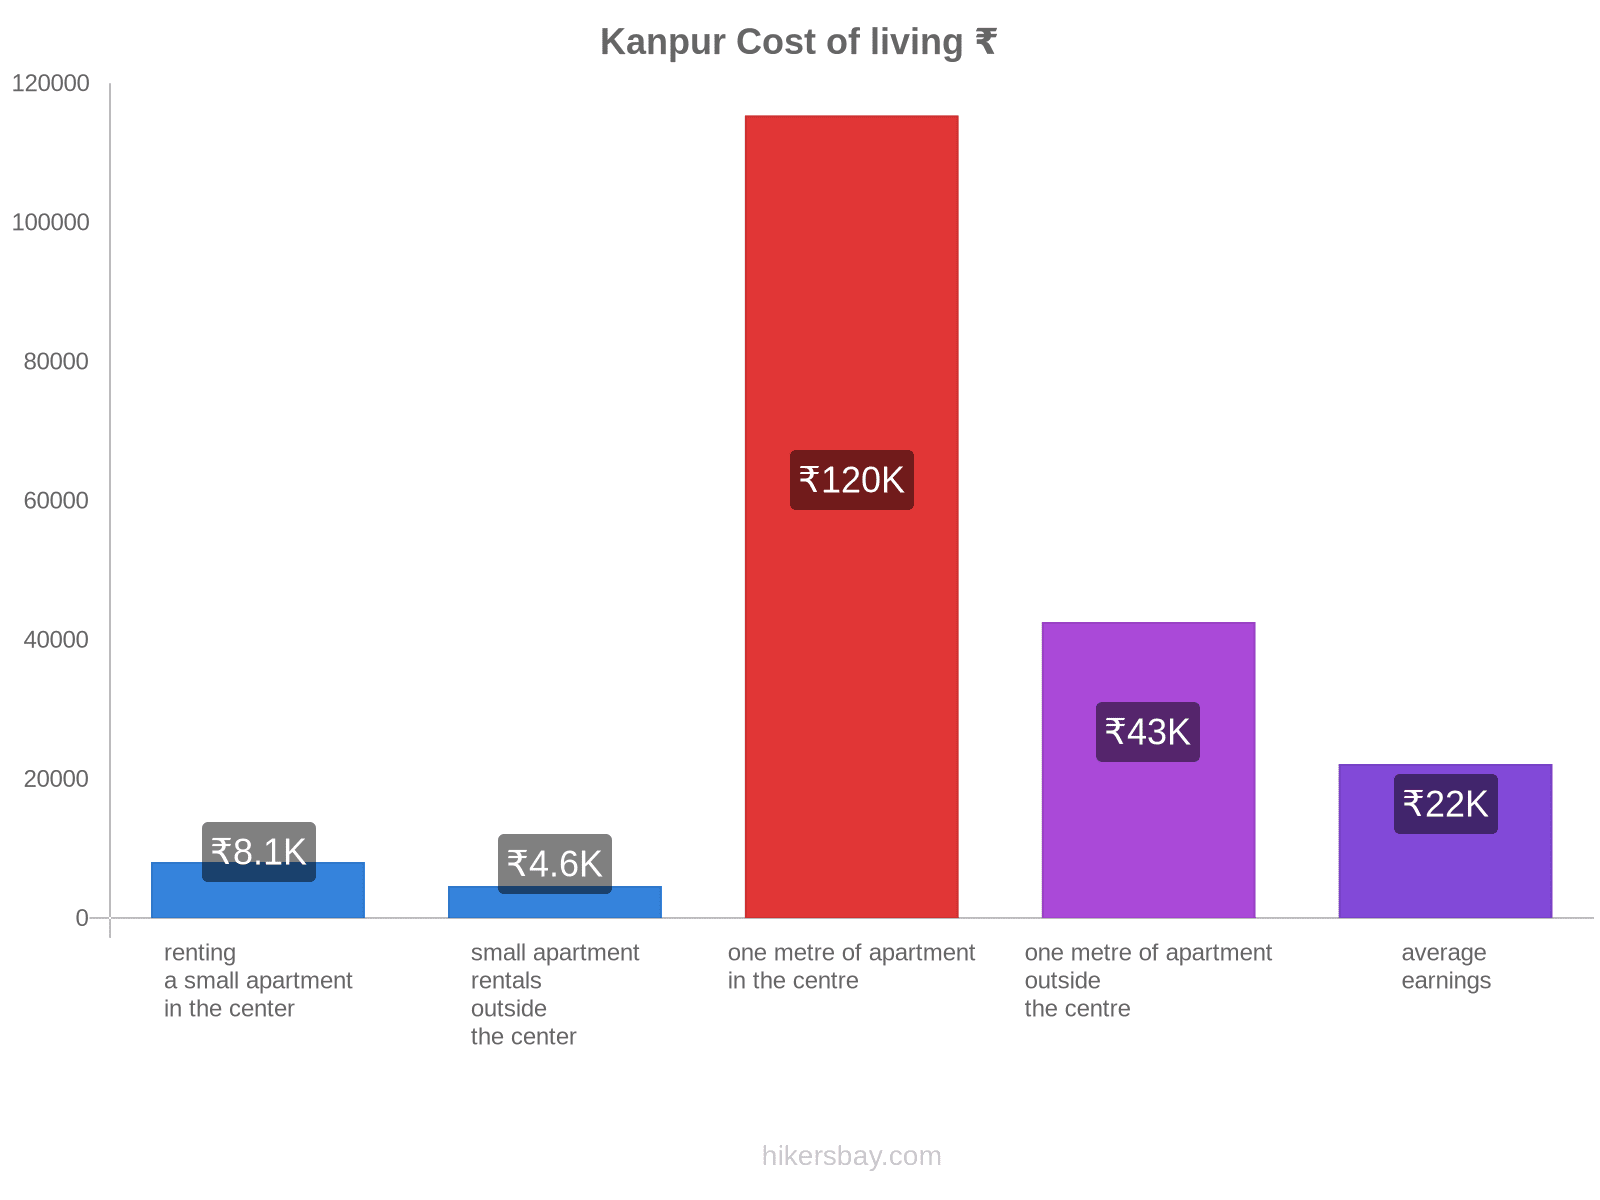 Kanpur cost of living hikersbay.com